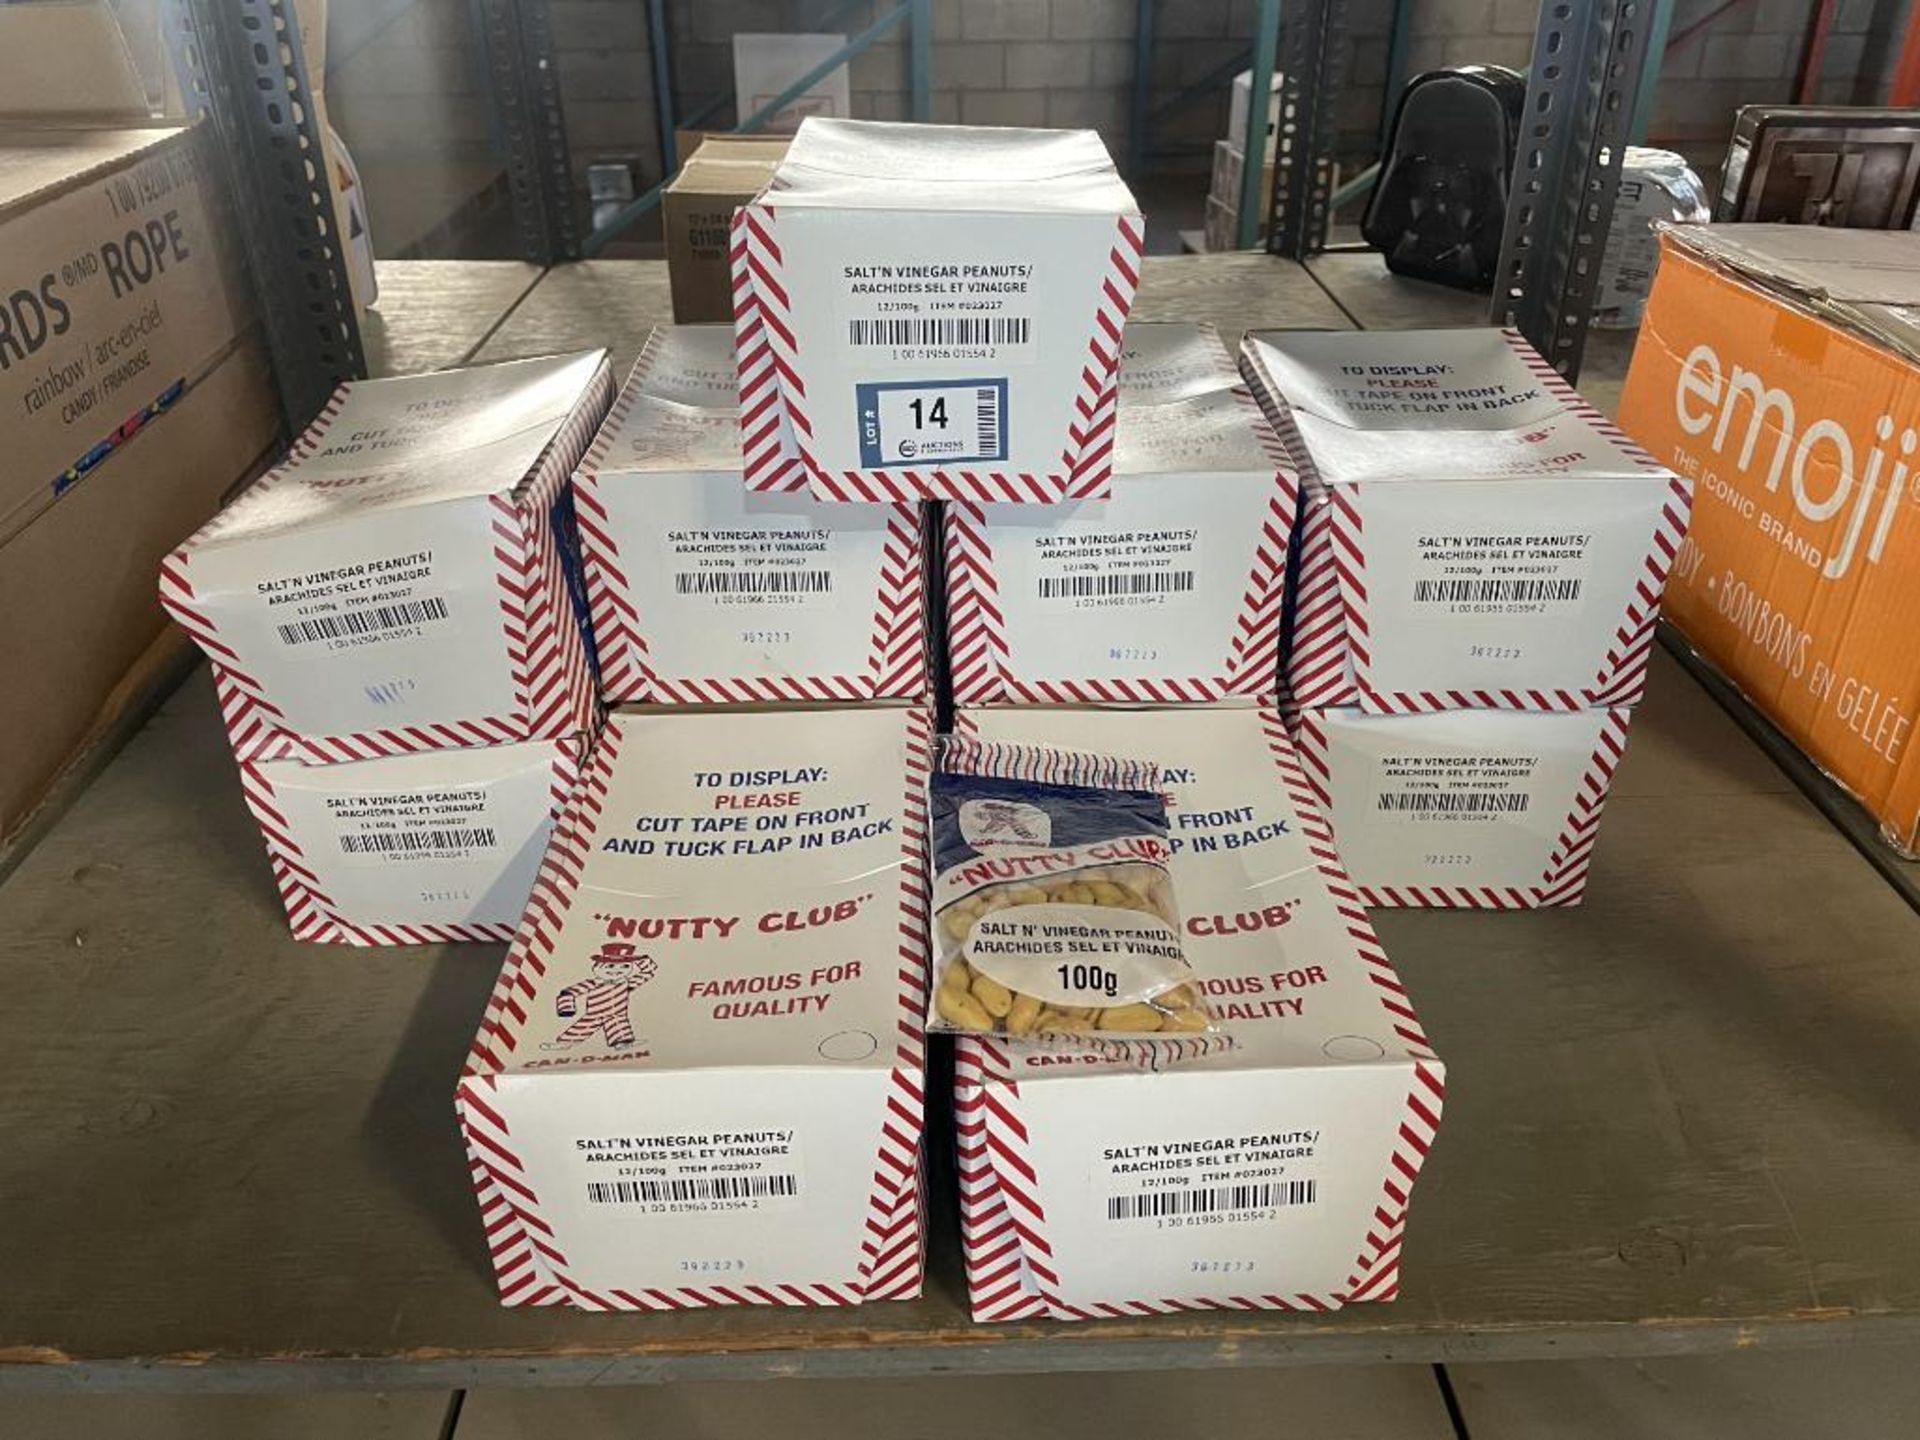 APPROX. (11) BOXES OF NUTTY CLUB SALT'N VINEGAR PEANUTS, 12/100G PER BOX